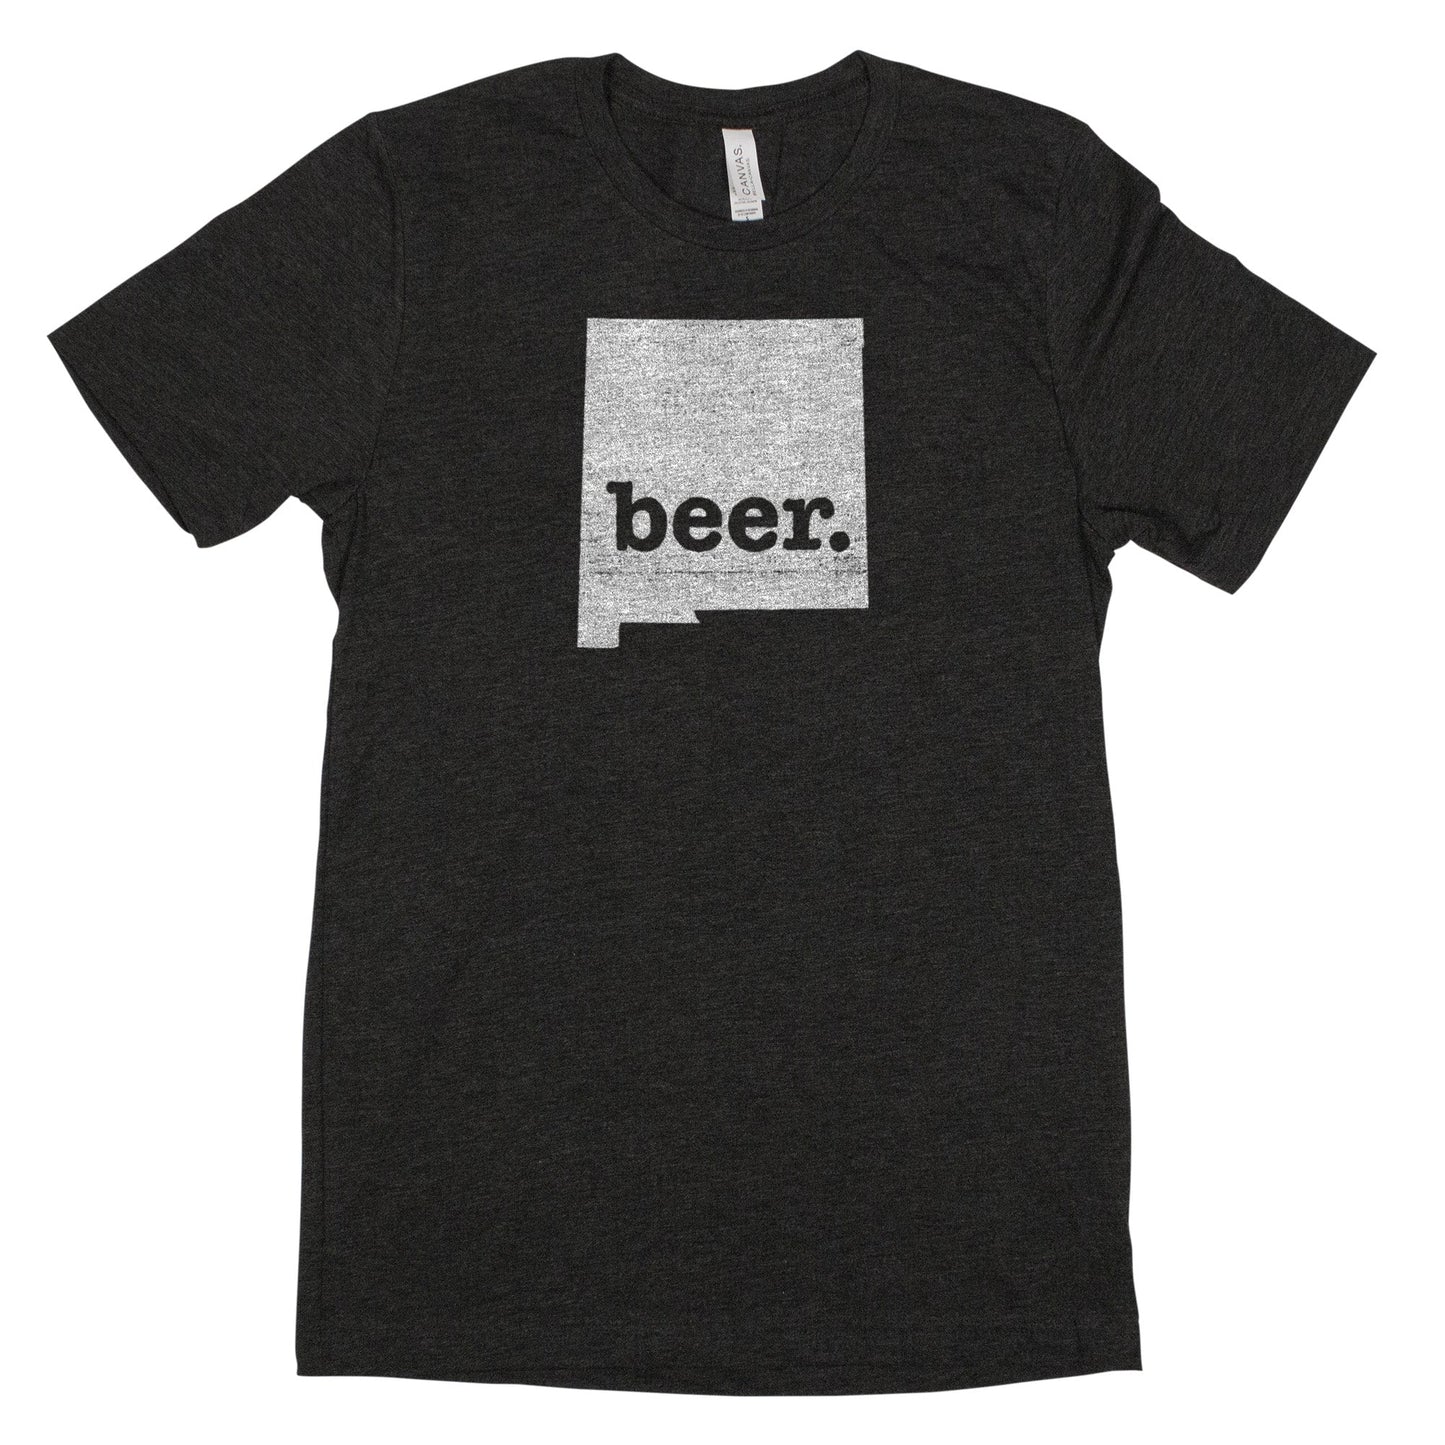 beer. Men's Unisex T-Shirt - New Mexico